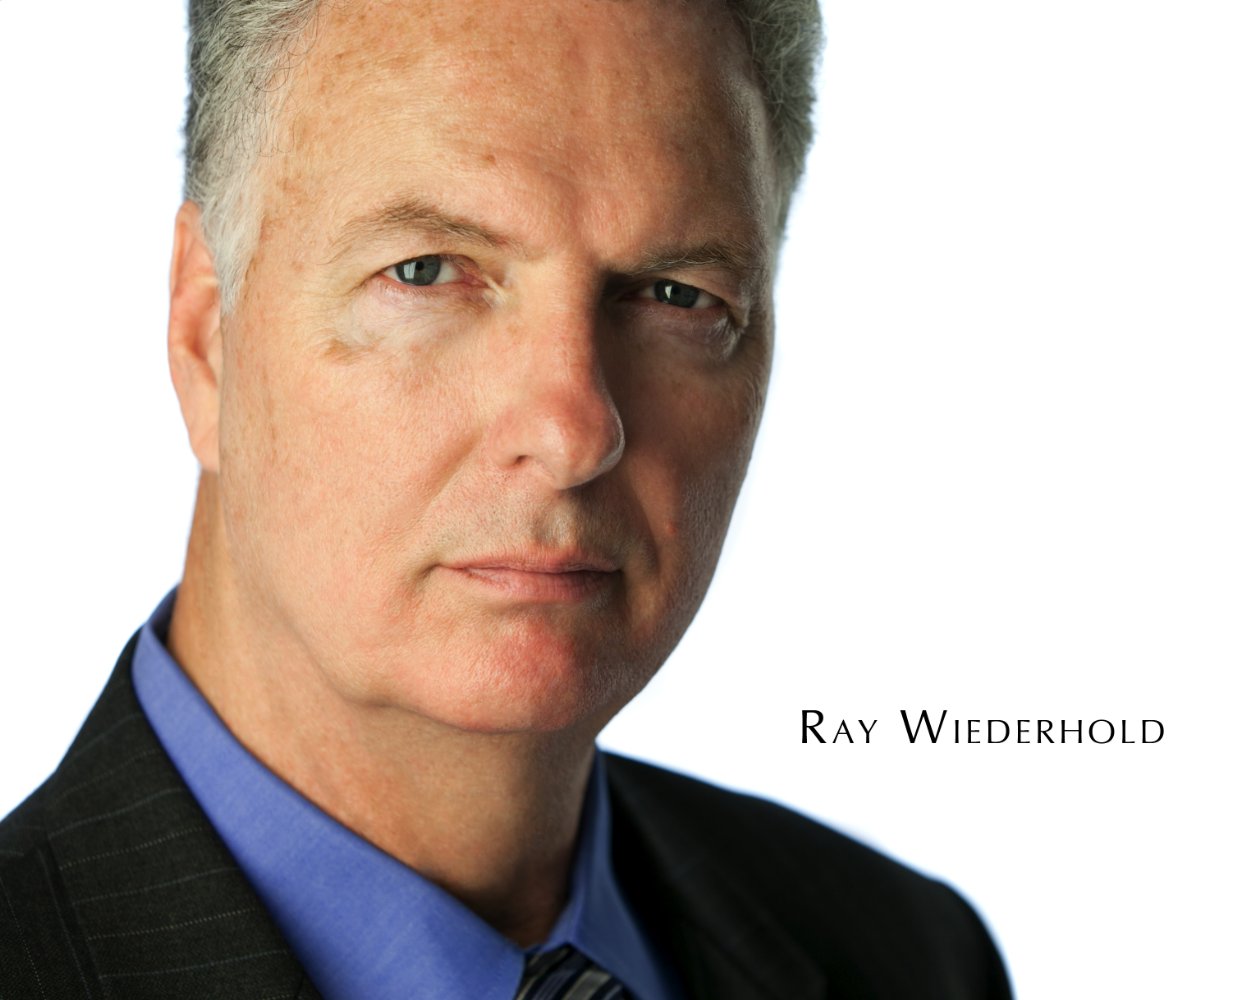 Ray Wiederhold